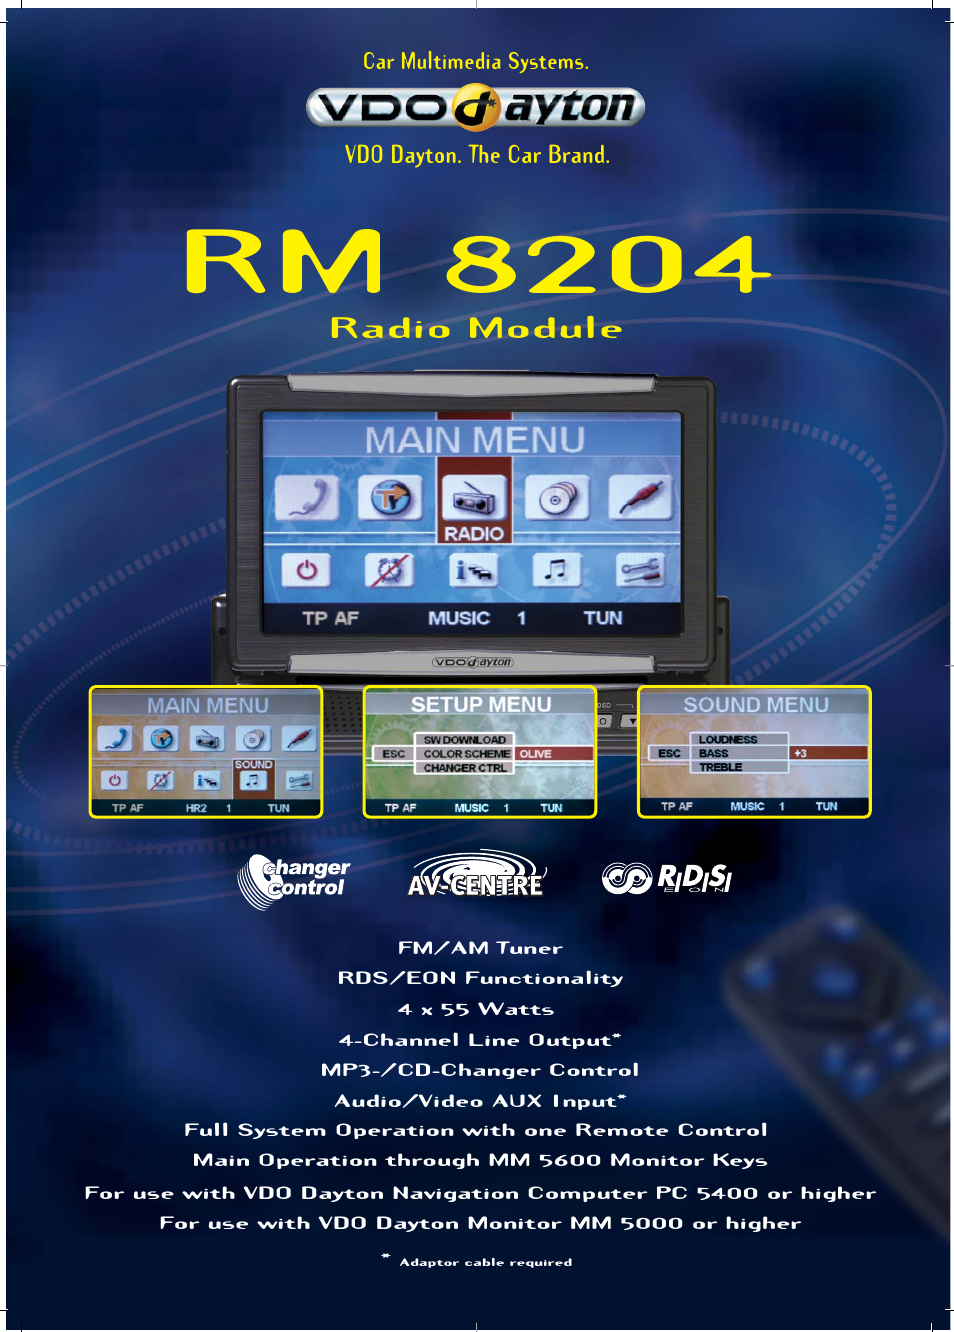 Radio Module RM 8204